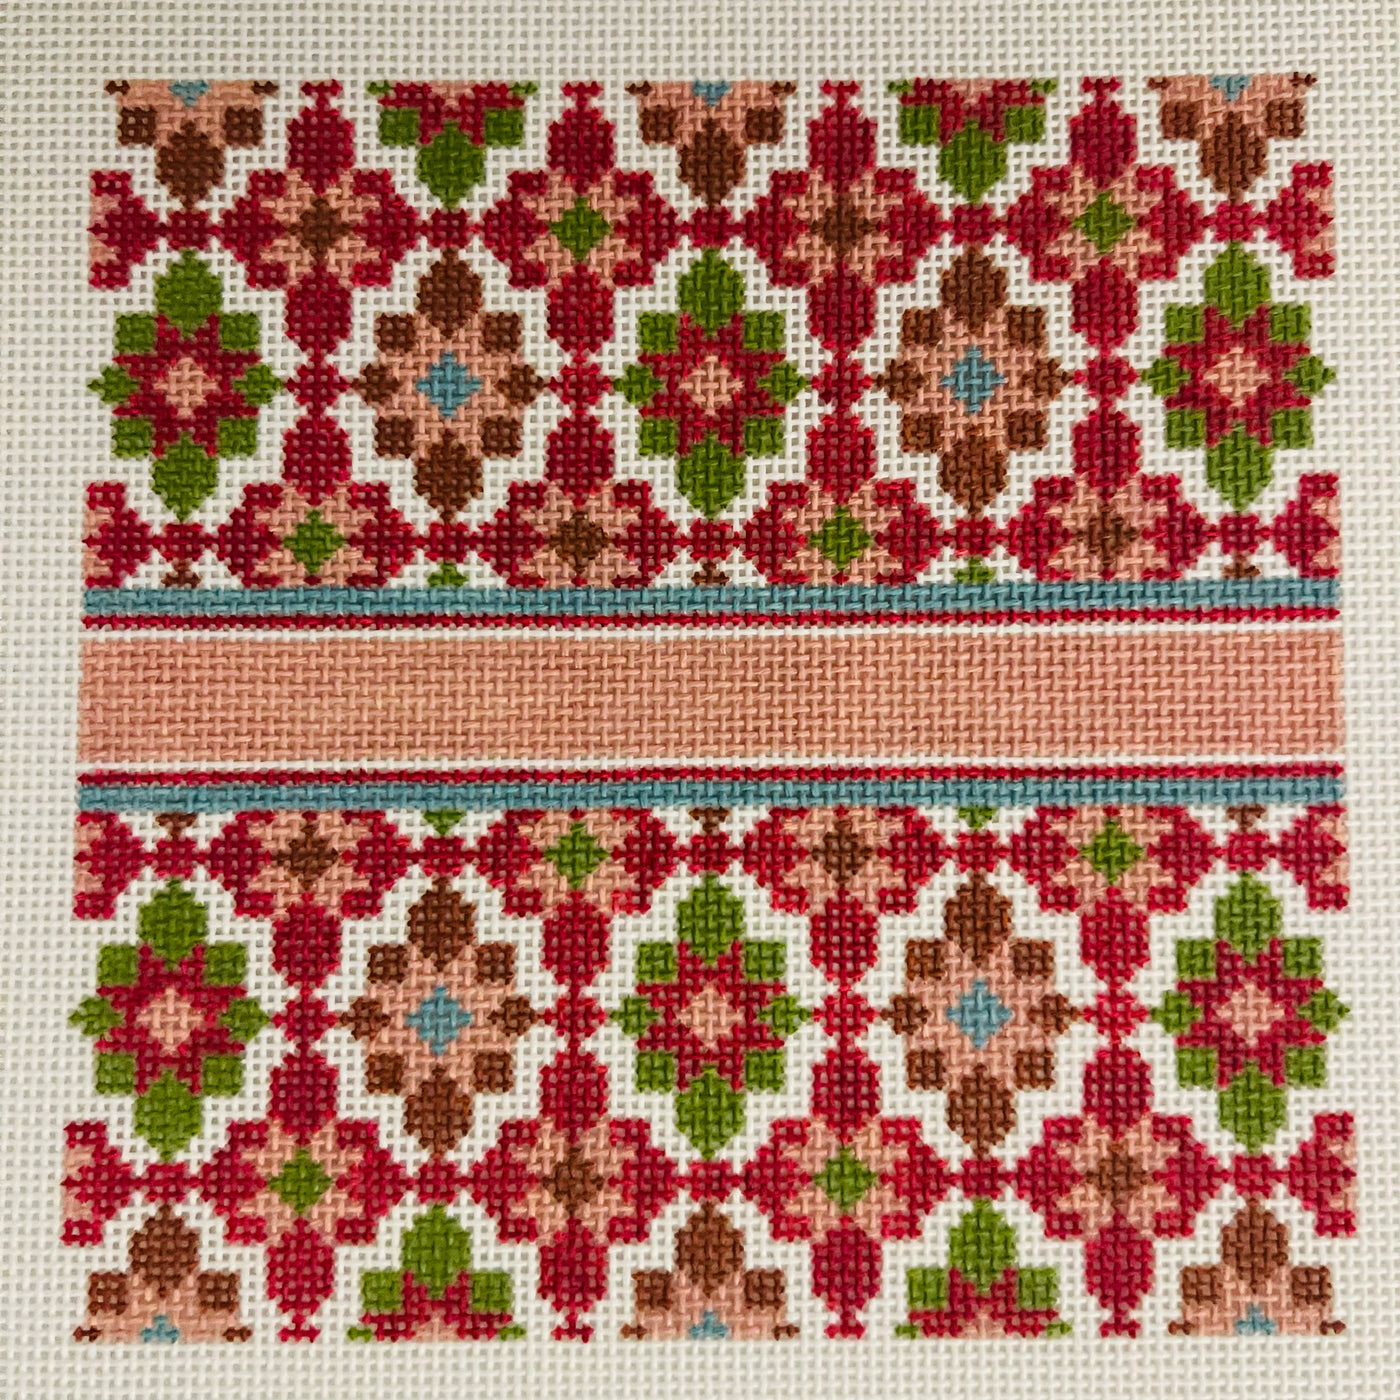 Portuguese Tiles 5" Square - Magenta Needlepoint Canvas